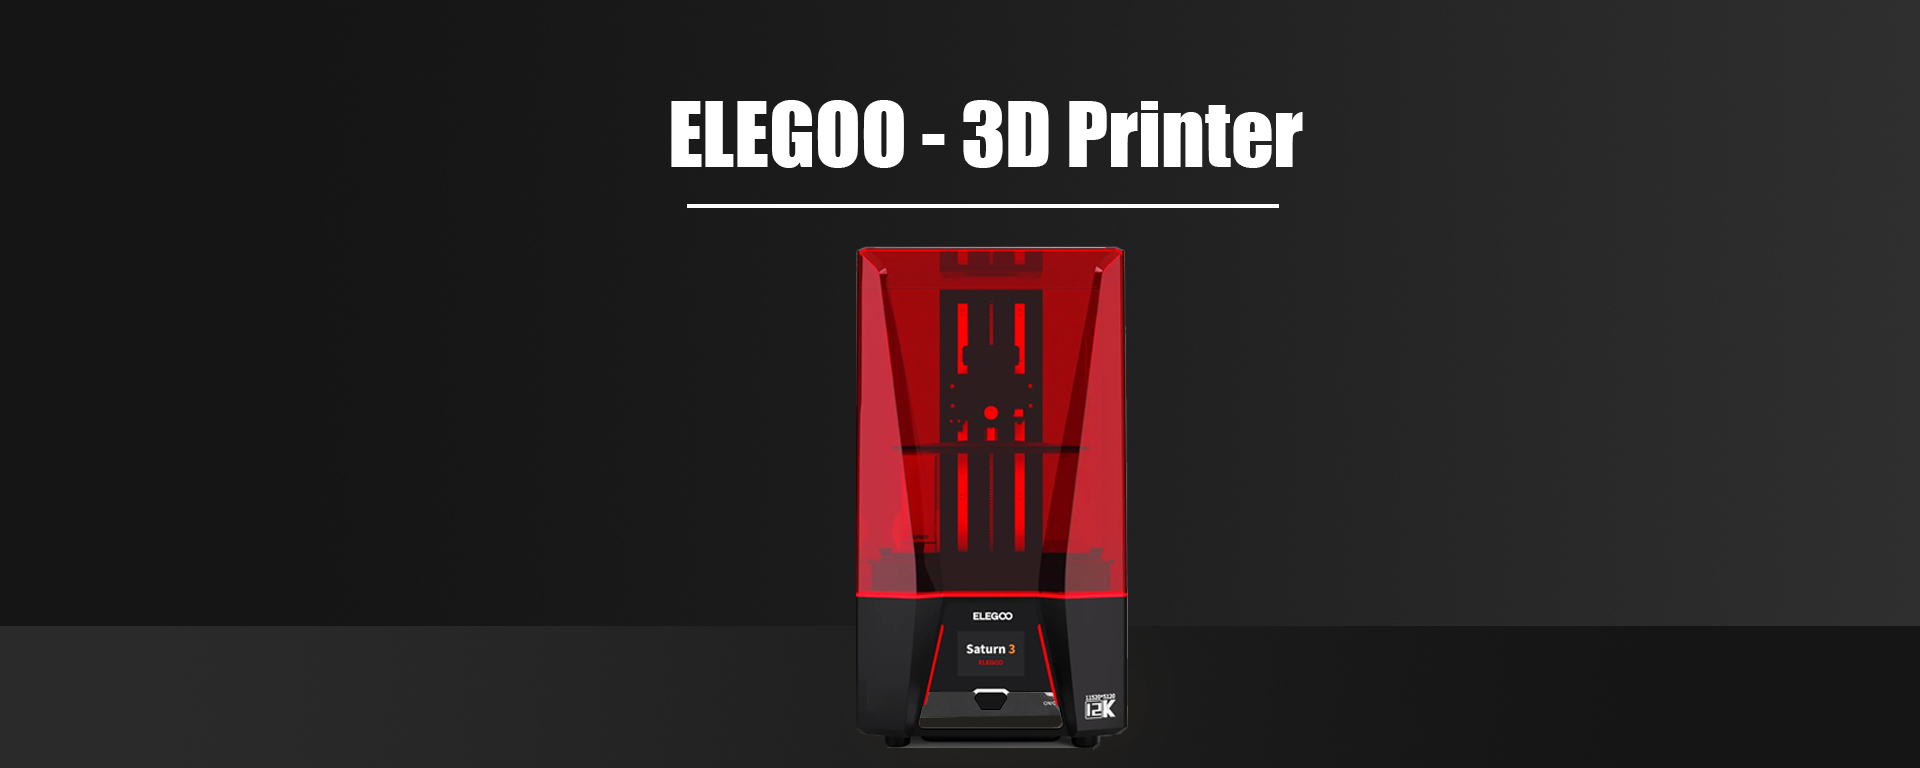 ELEGOO - 3D Printer